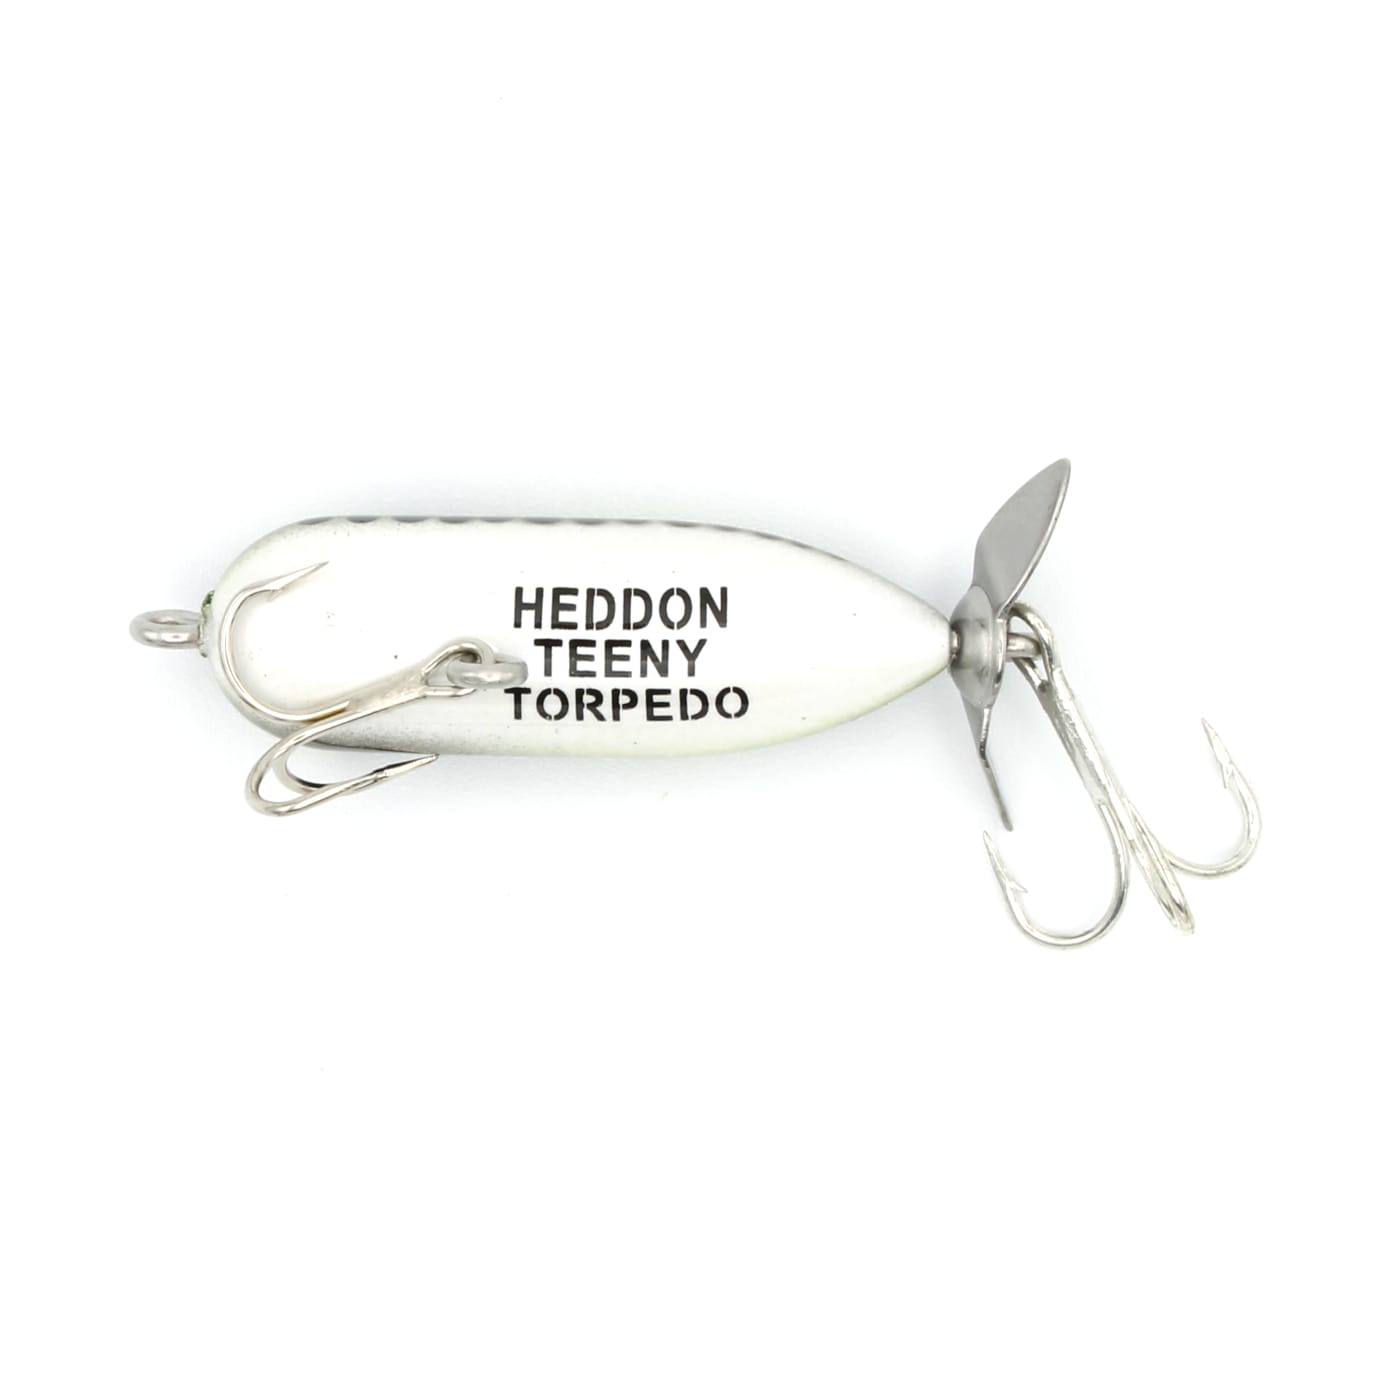 Heddon Teeny Torpedo - Bait Finesse Empire